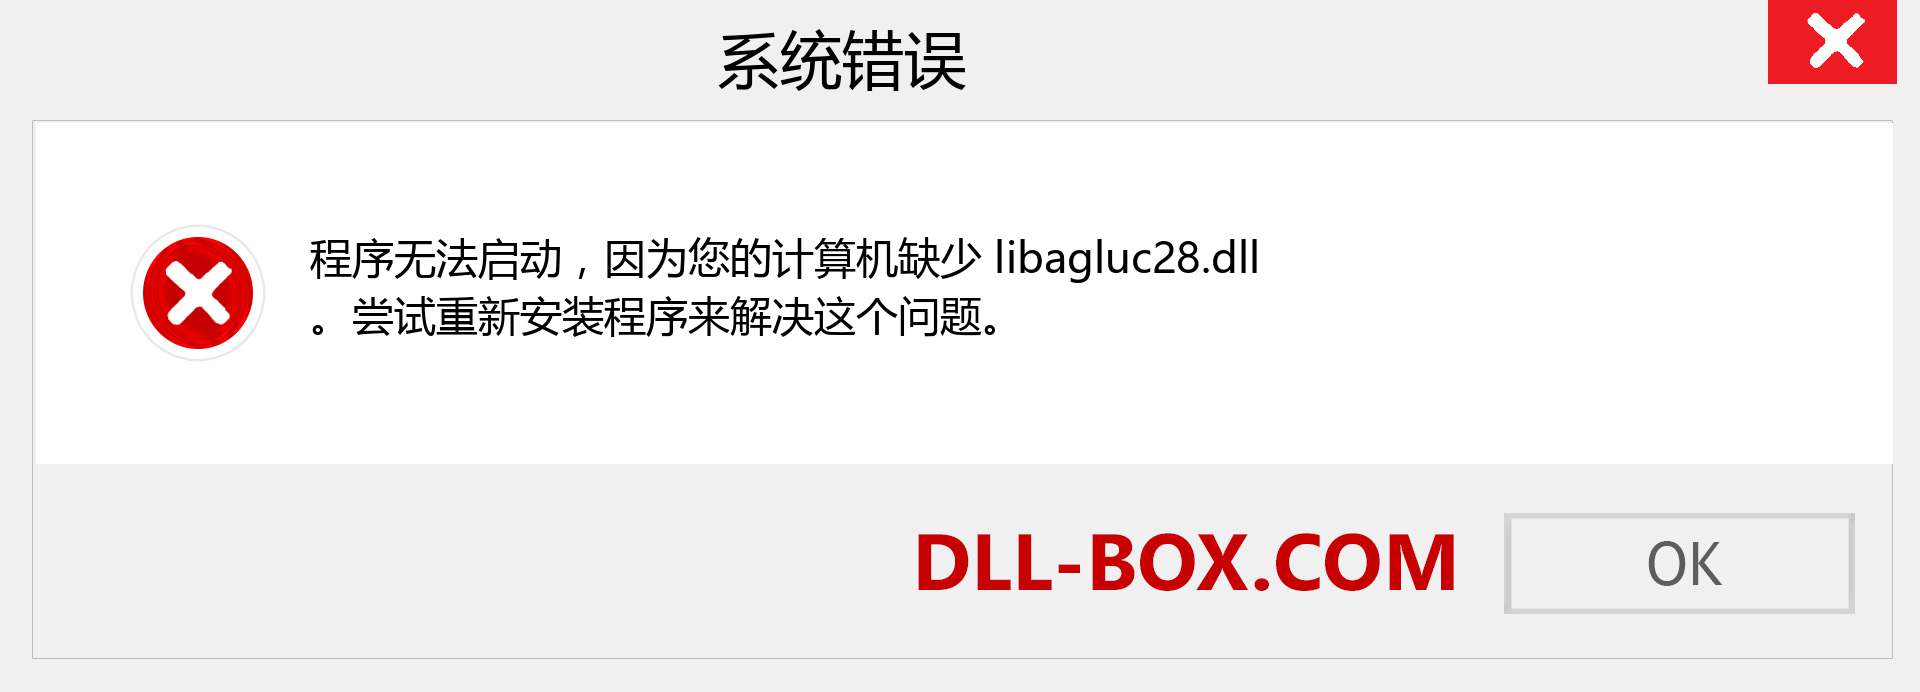 libagluc28.dll 文件丢失？。 适用于 Windows 7、8、10 的下载 - 修复 Windows、照片、图像上的 libagluc28 dll 丢失错误